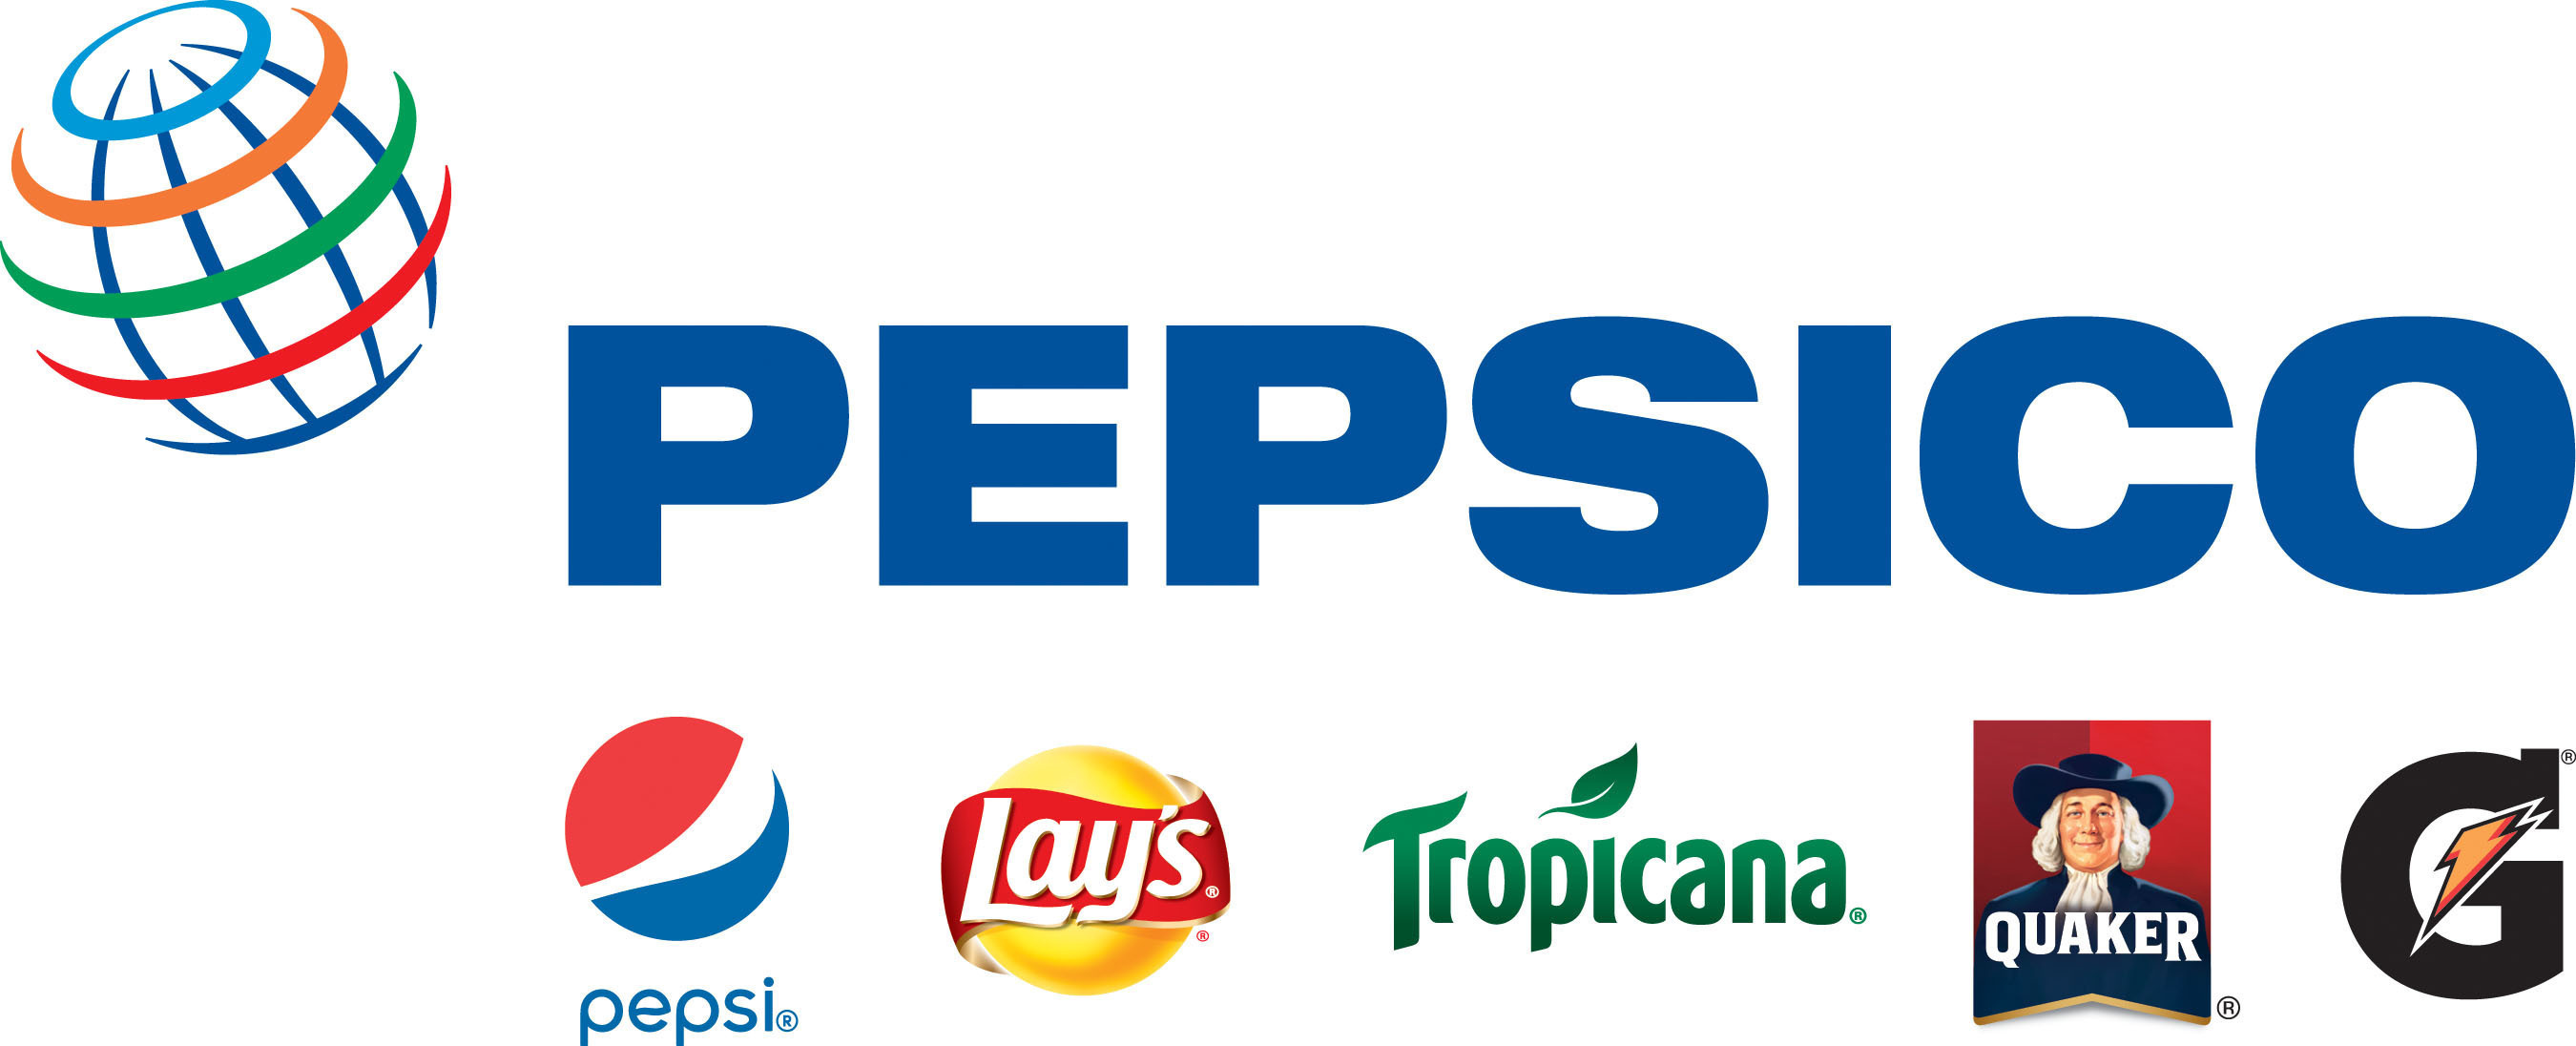 PepsiCo logo (PRNewsFoto/PepsiCo) (PRNewsFoto/PepsiCo)